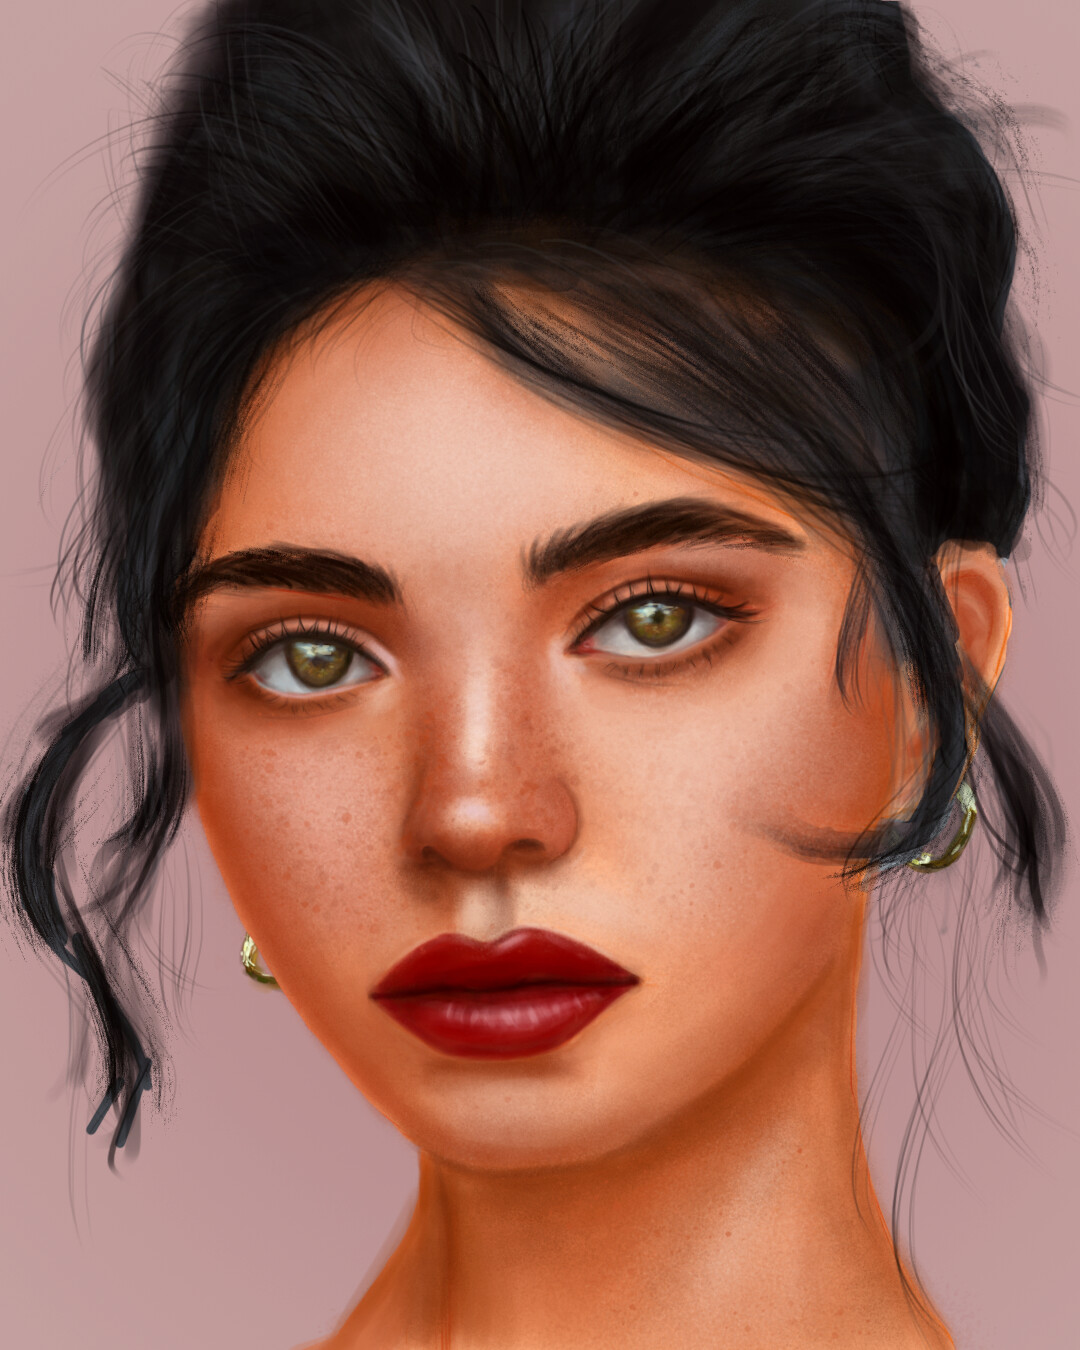 ArtStation - Digital painting portrait